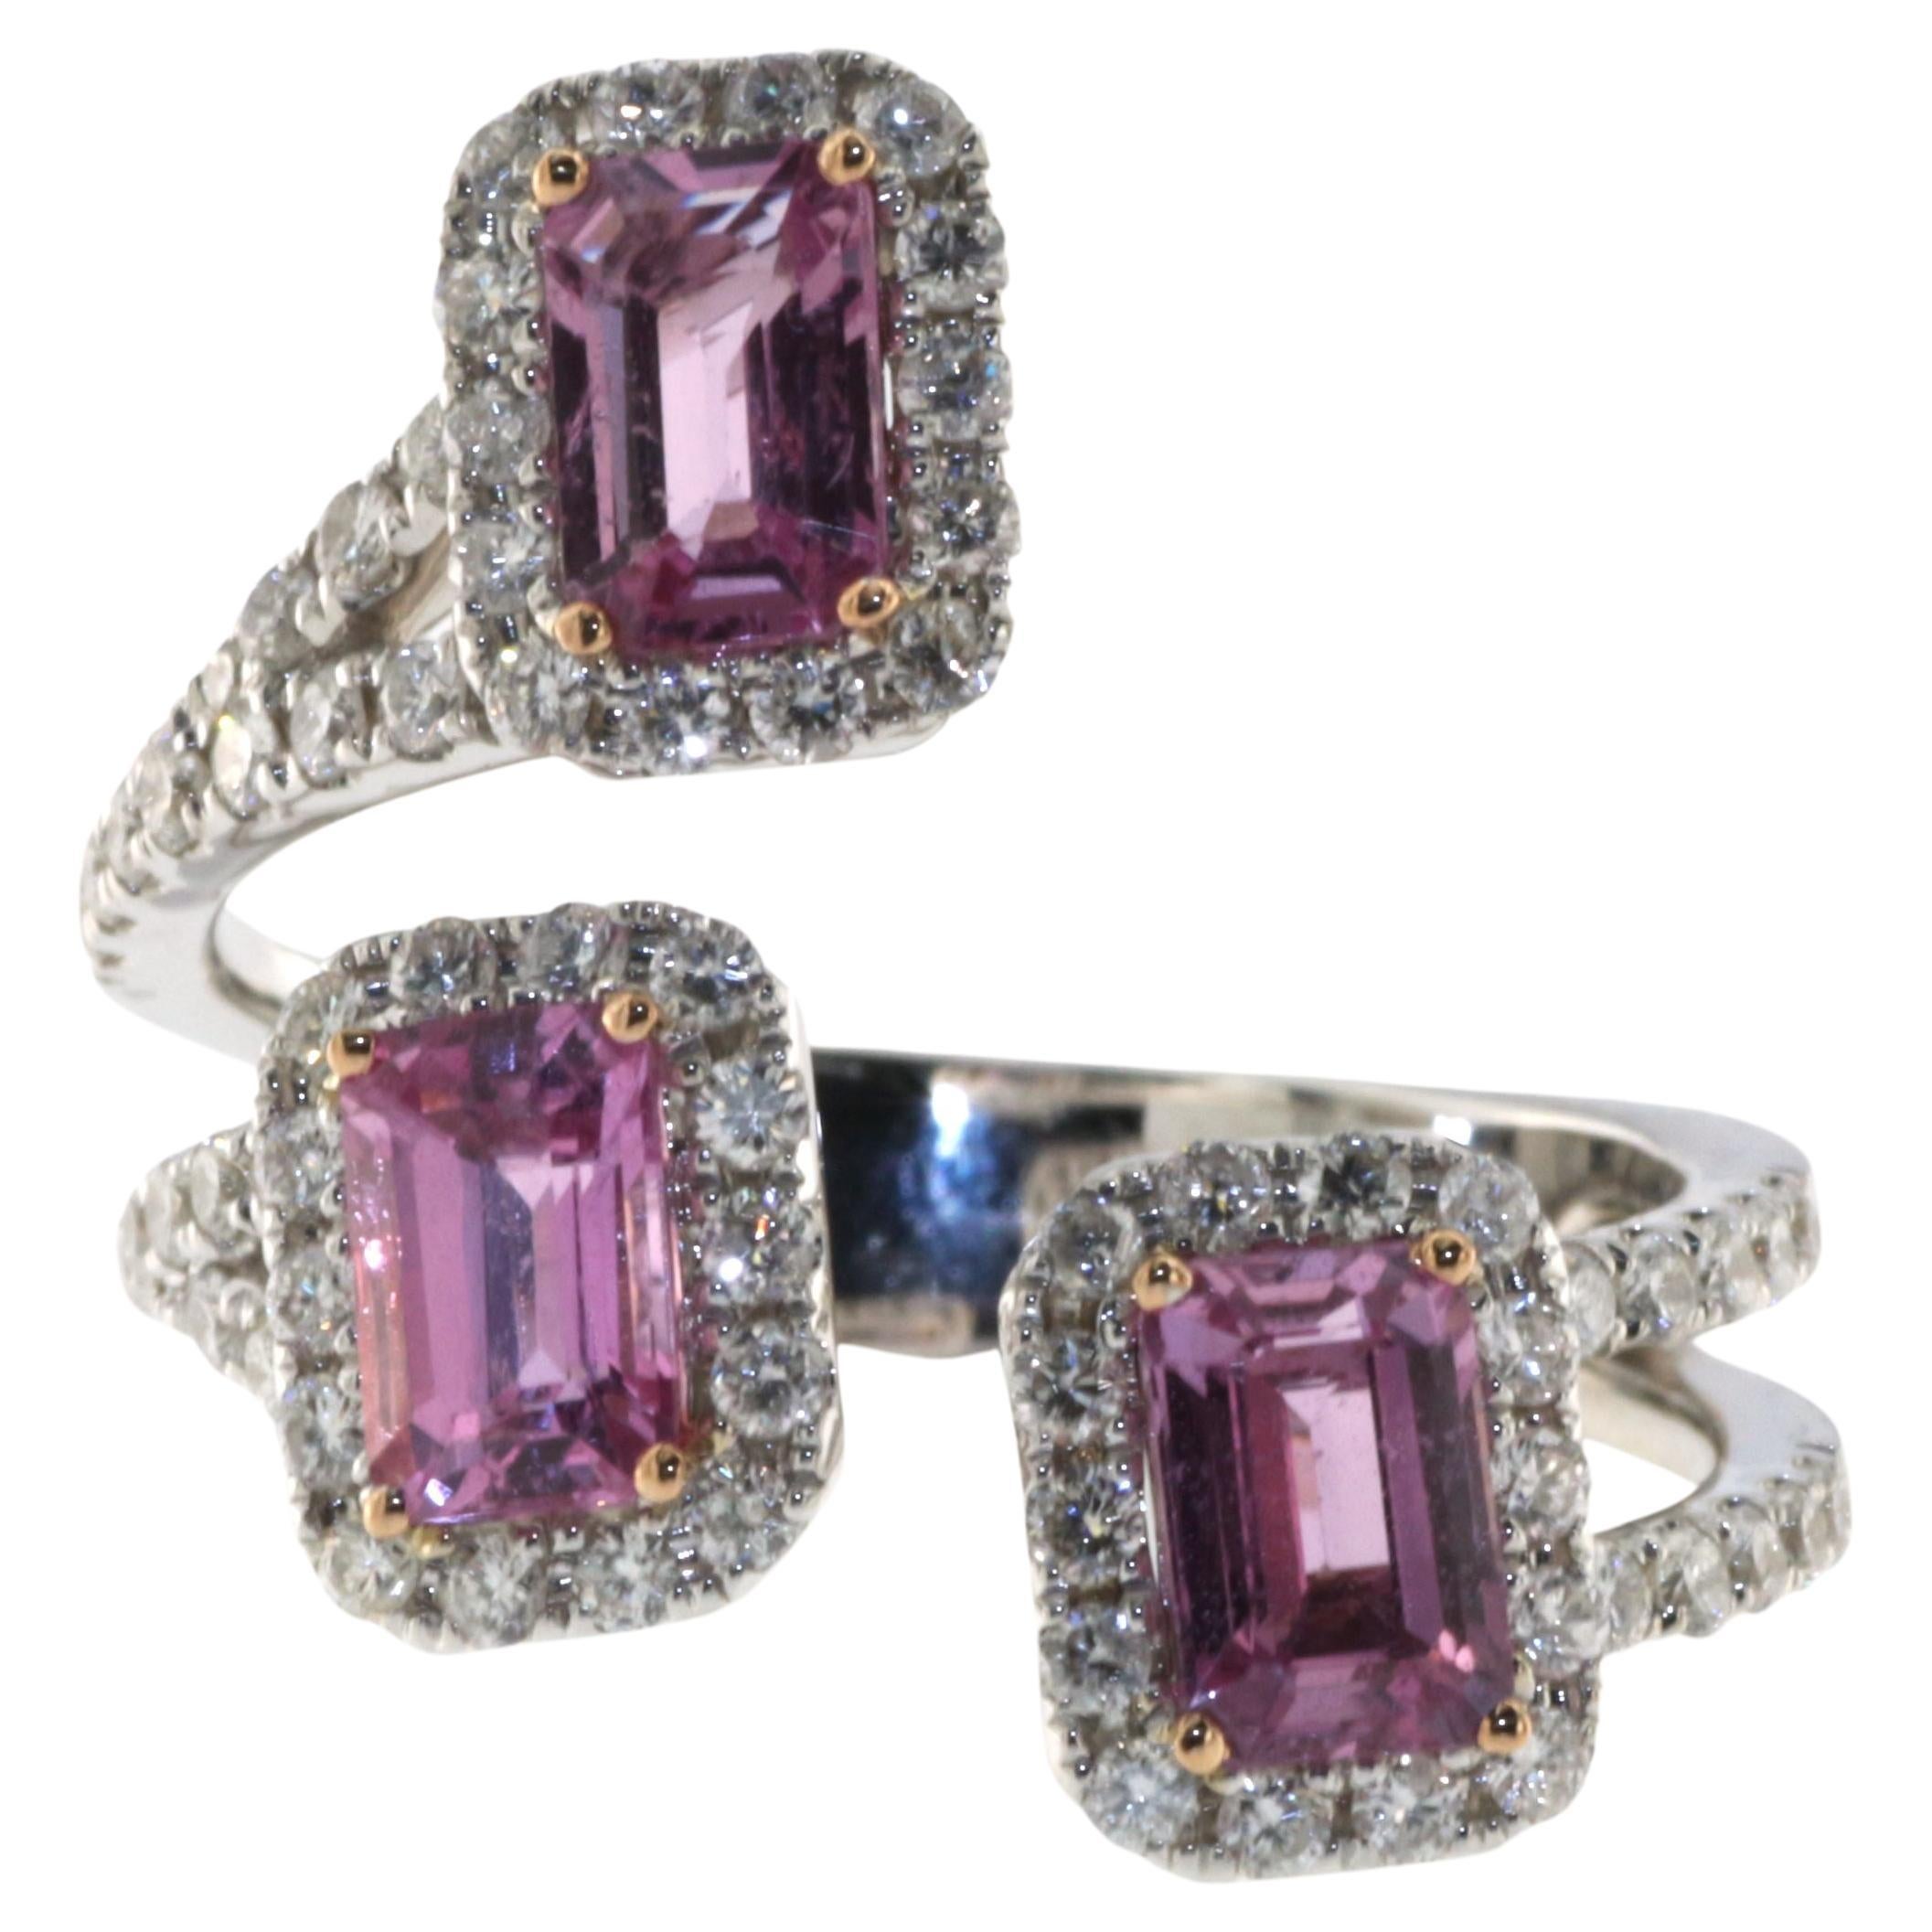 1.85 Carat Pink Sapphire Diamond Three Stones Ring in 18 Karat White Gold